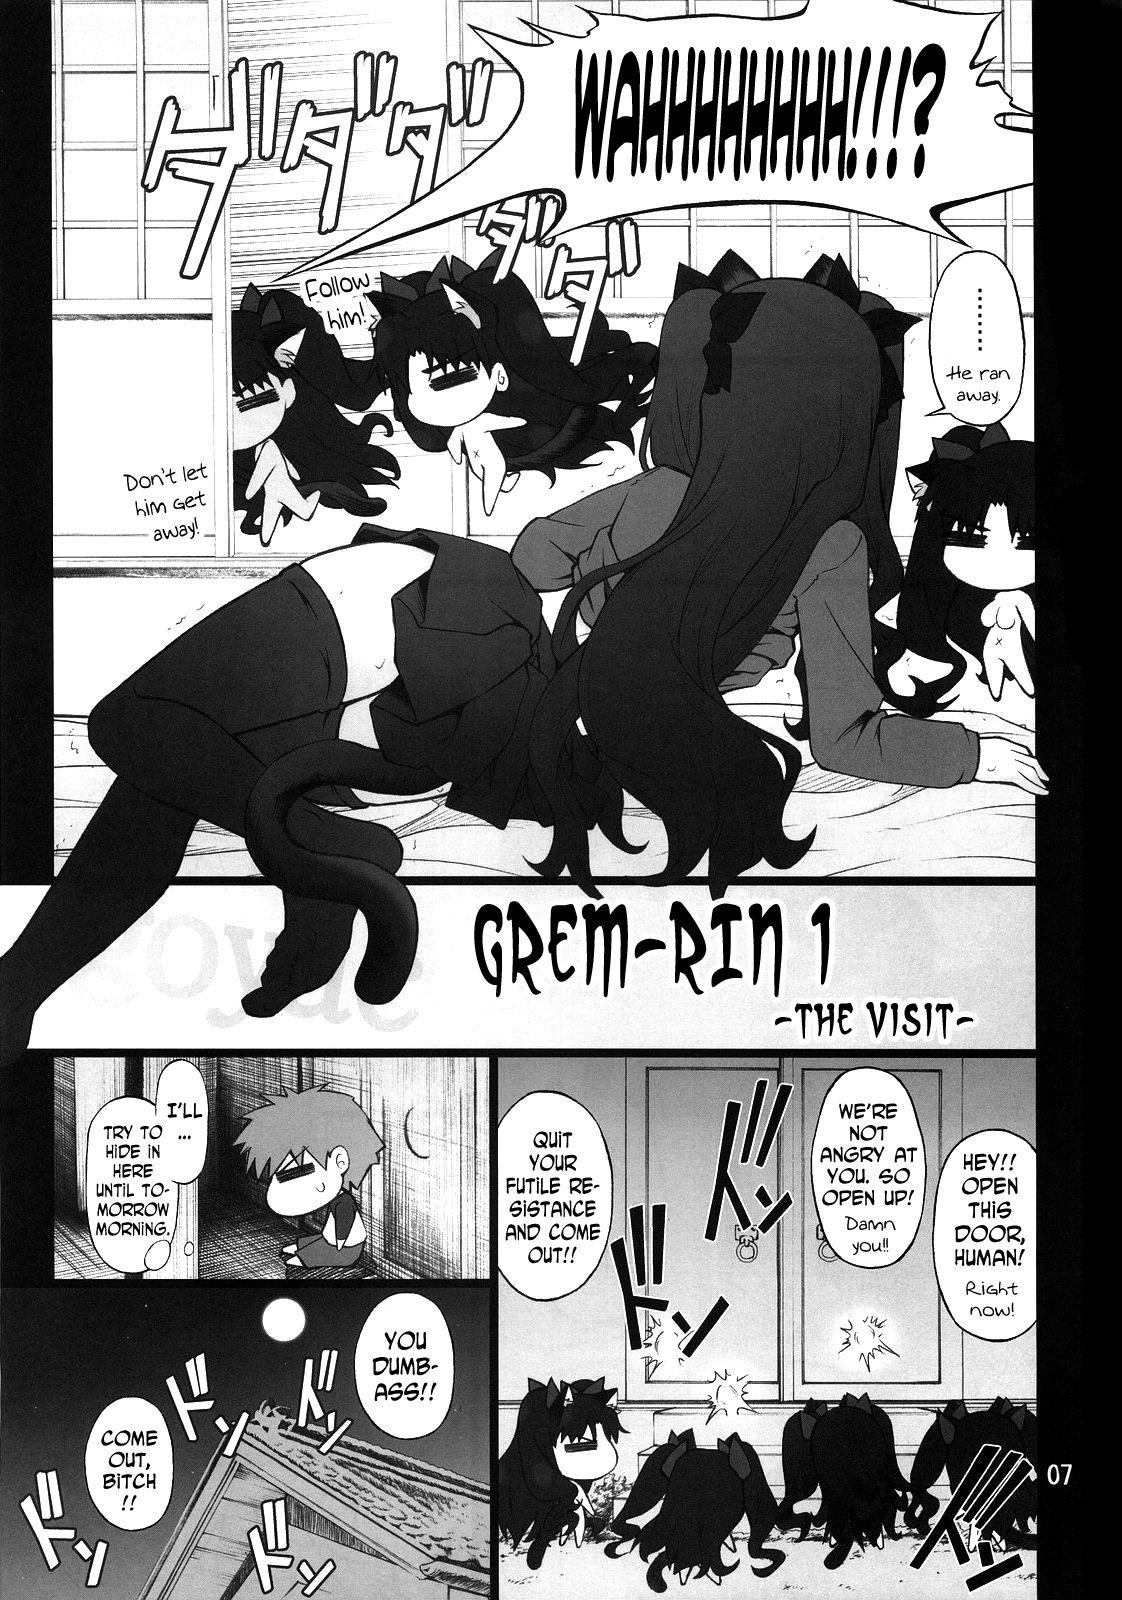 Nurumassage Grem-Rin 2 - Fate stay night Legs - Page 6